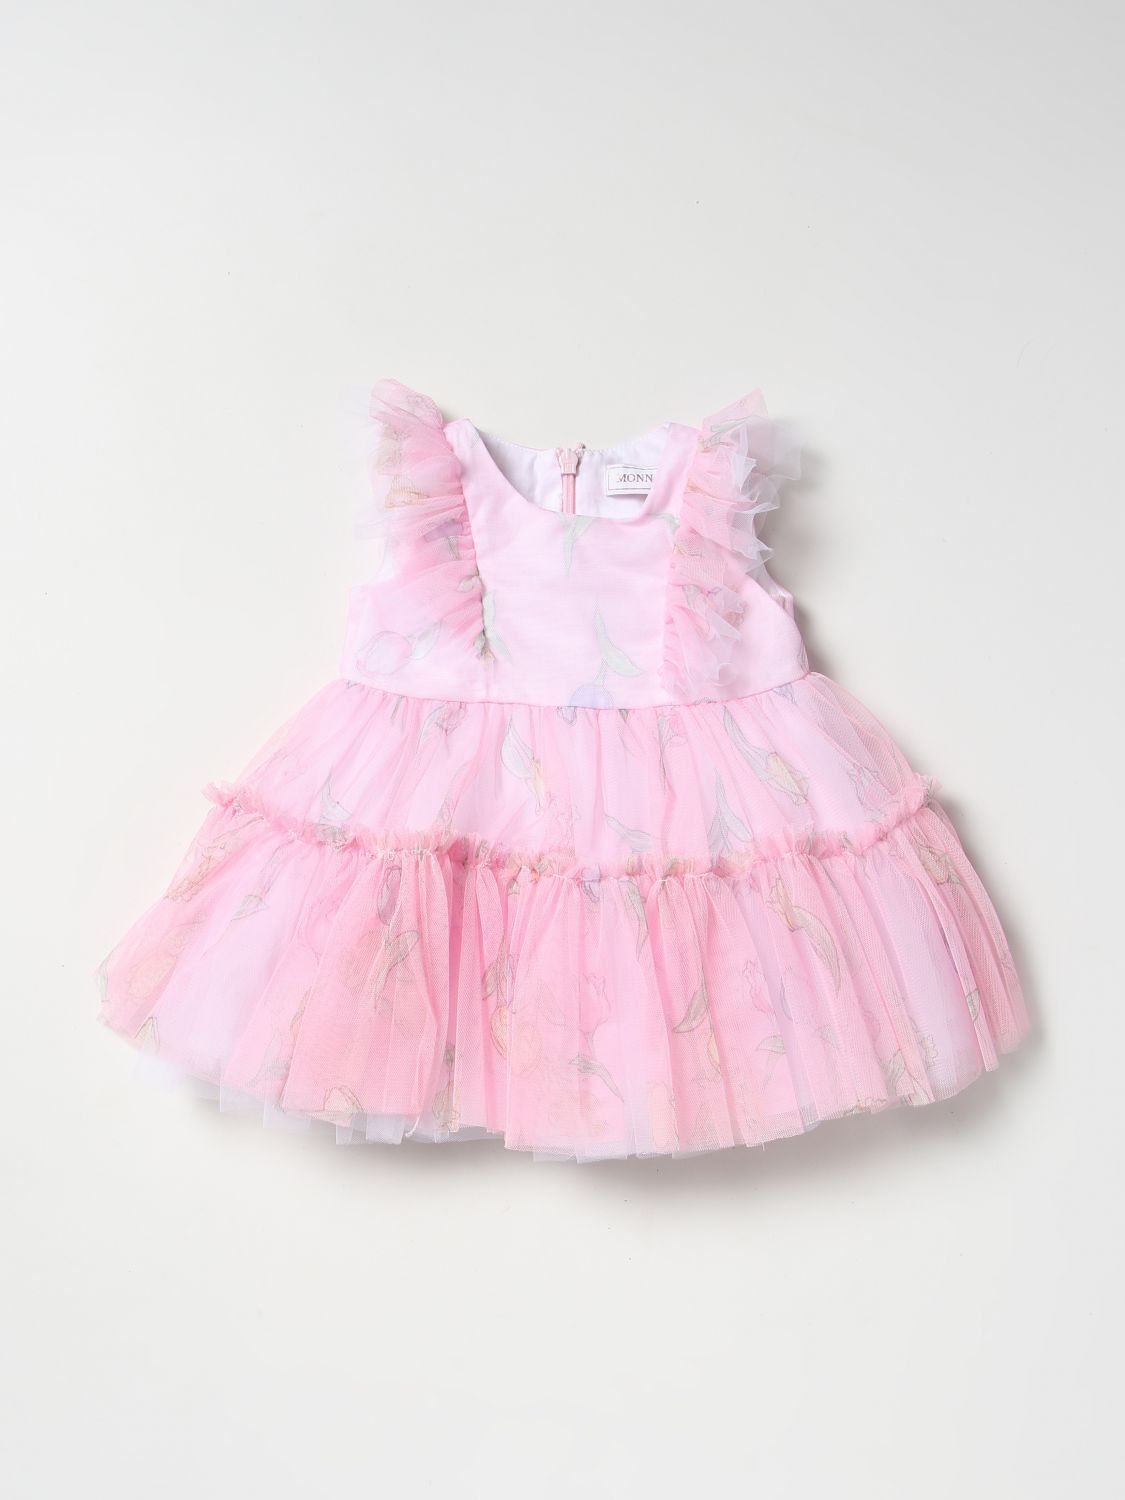 Monnalisa Babies' Romper  Kids Color Pink